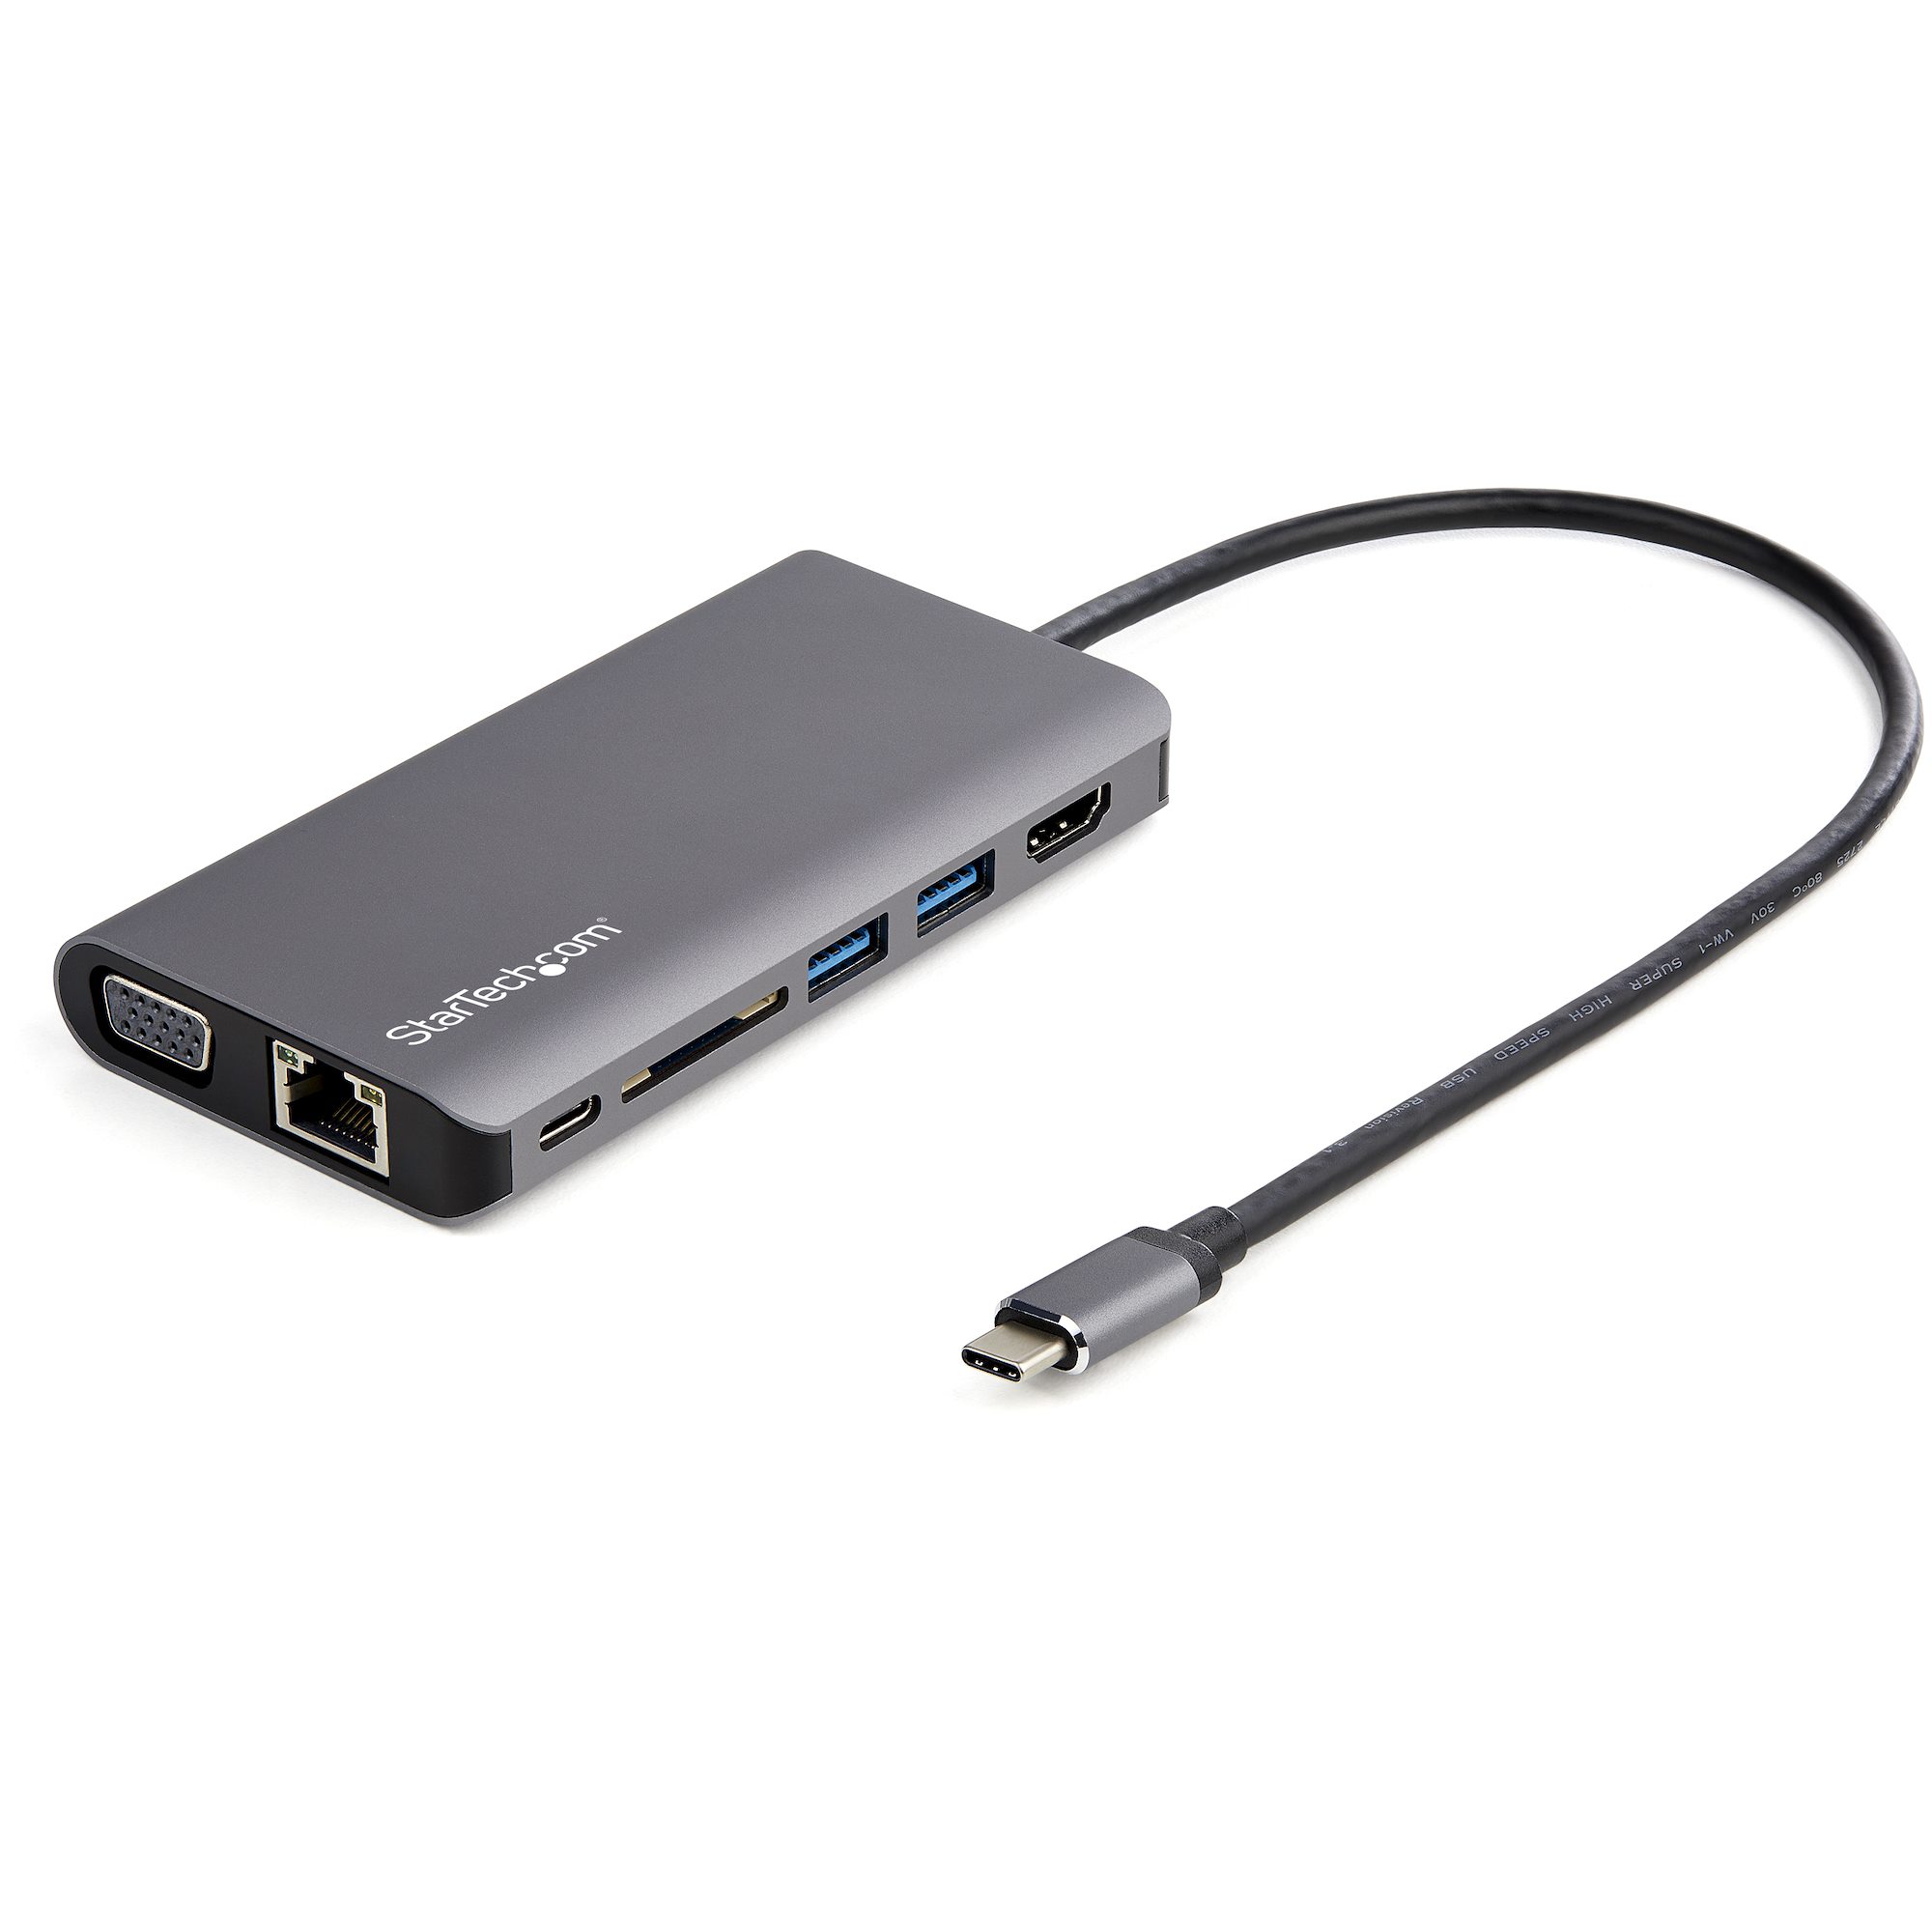 SD/TF Card Reader Gigabit Ethernet USB C Charging USB C to 3.5mm 9-in-1 USB C Adapter with 4K USB C to HDMI,VGA Thunderbolt 3 2 USB 3.0 USB C Hub USB C Dock Compatible Apple MacBook Pro 13/15 